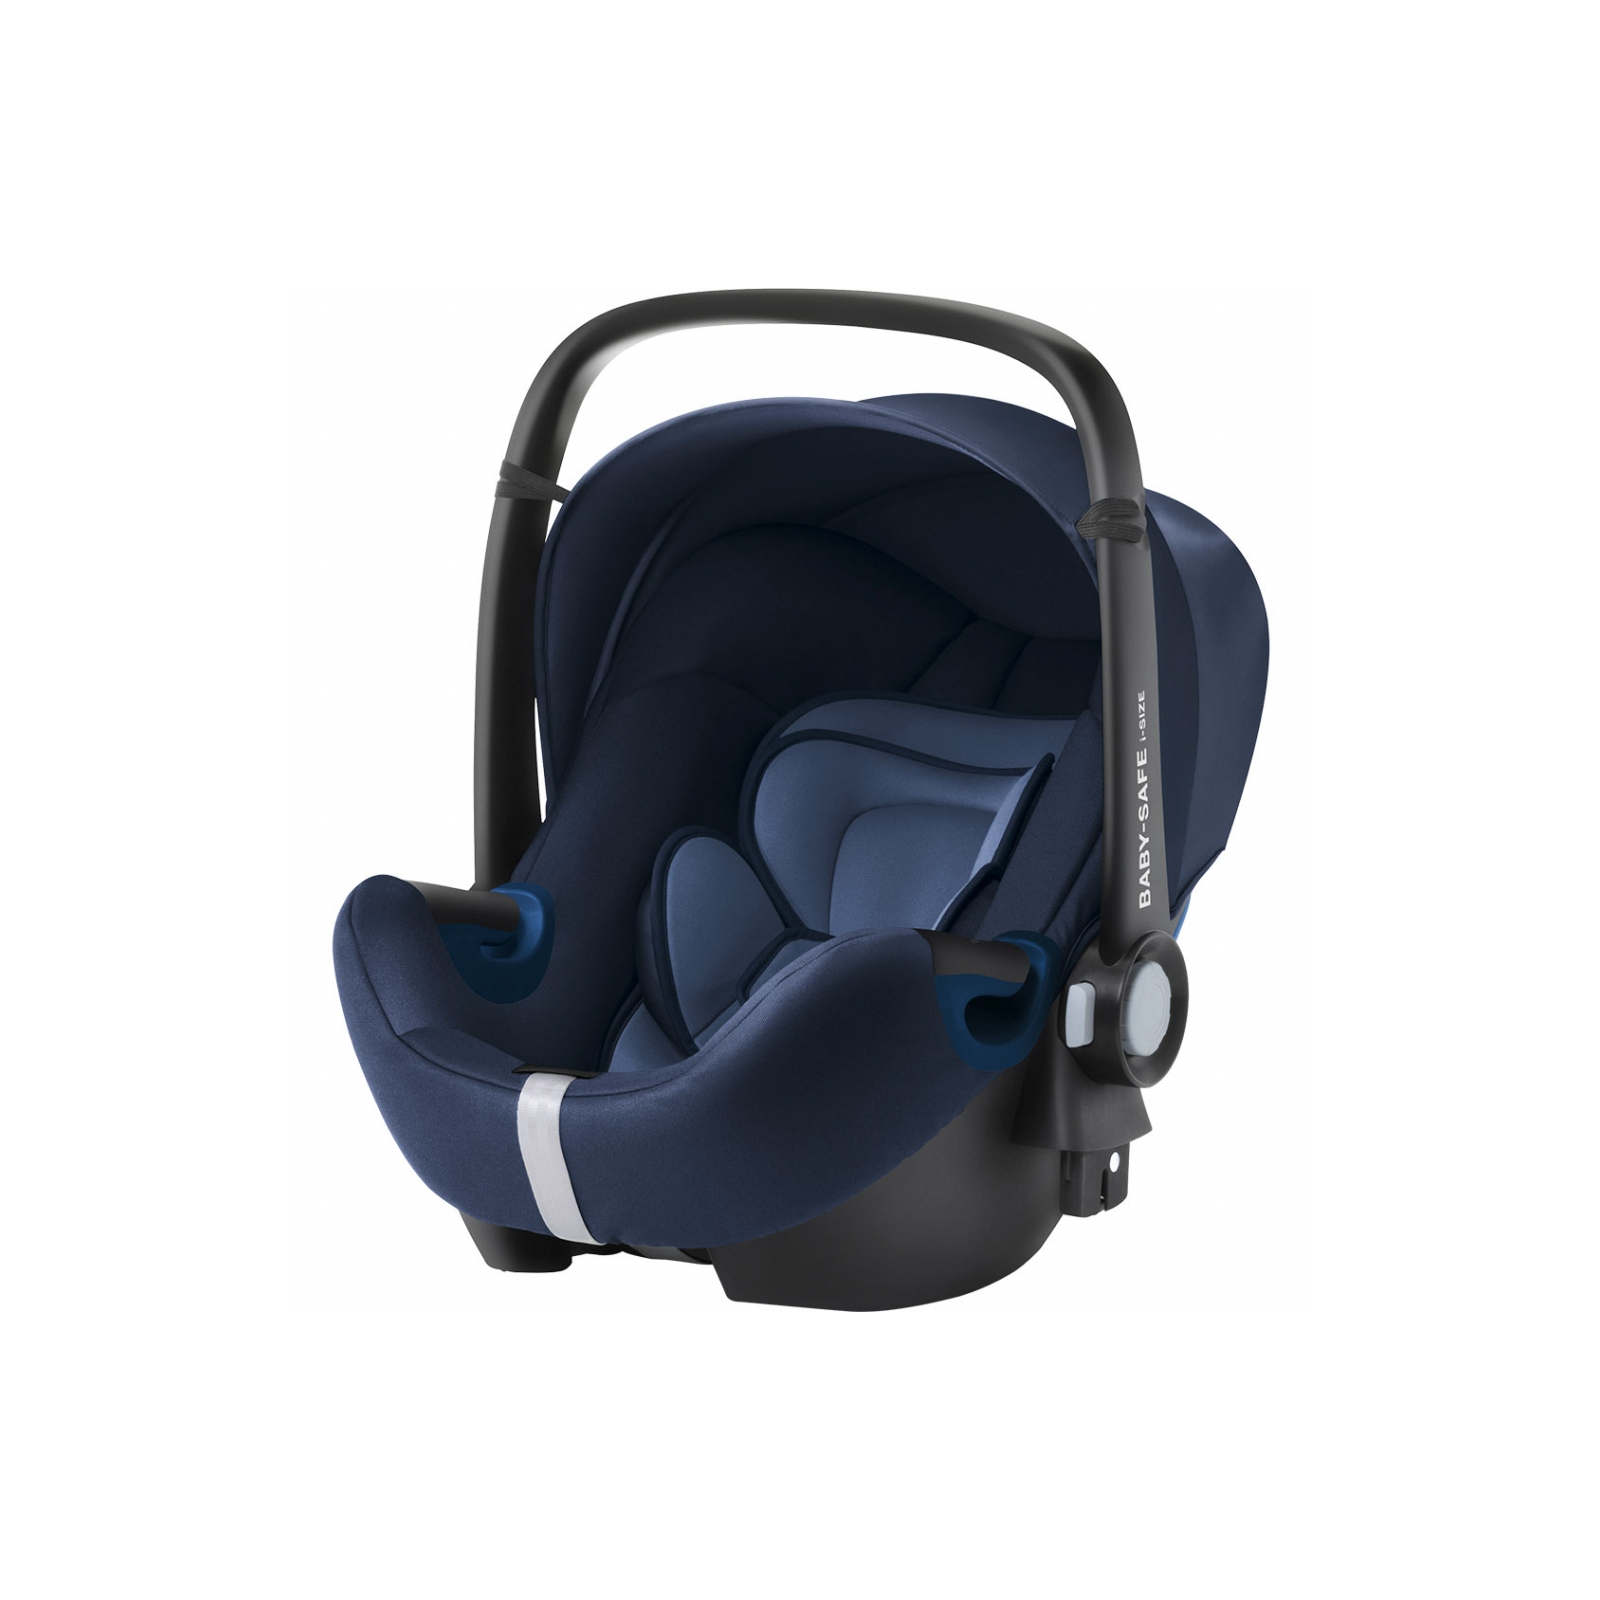 Автокрісло Britax-Romer Baby-Safe2 i-Size Moonlight Blue (2000029699)